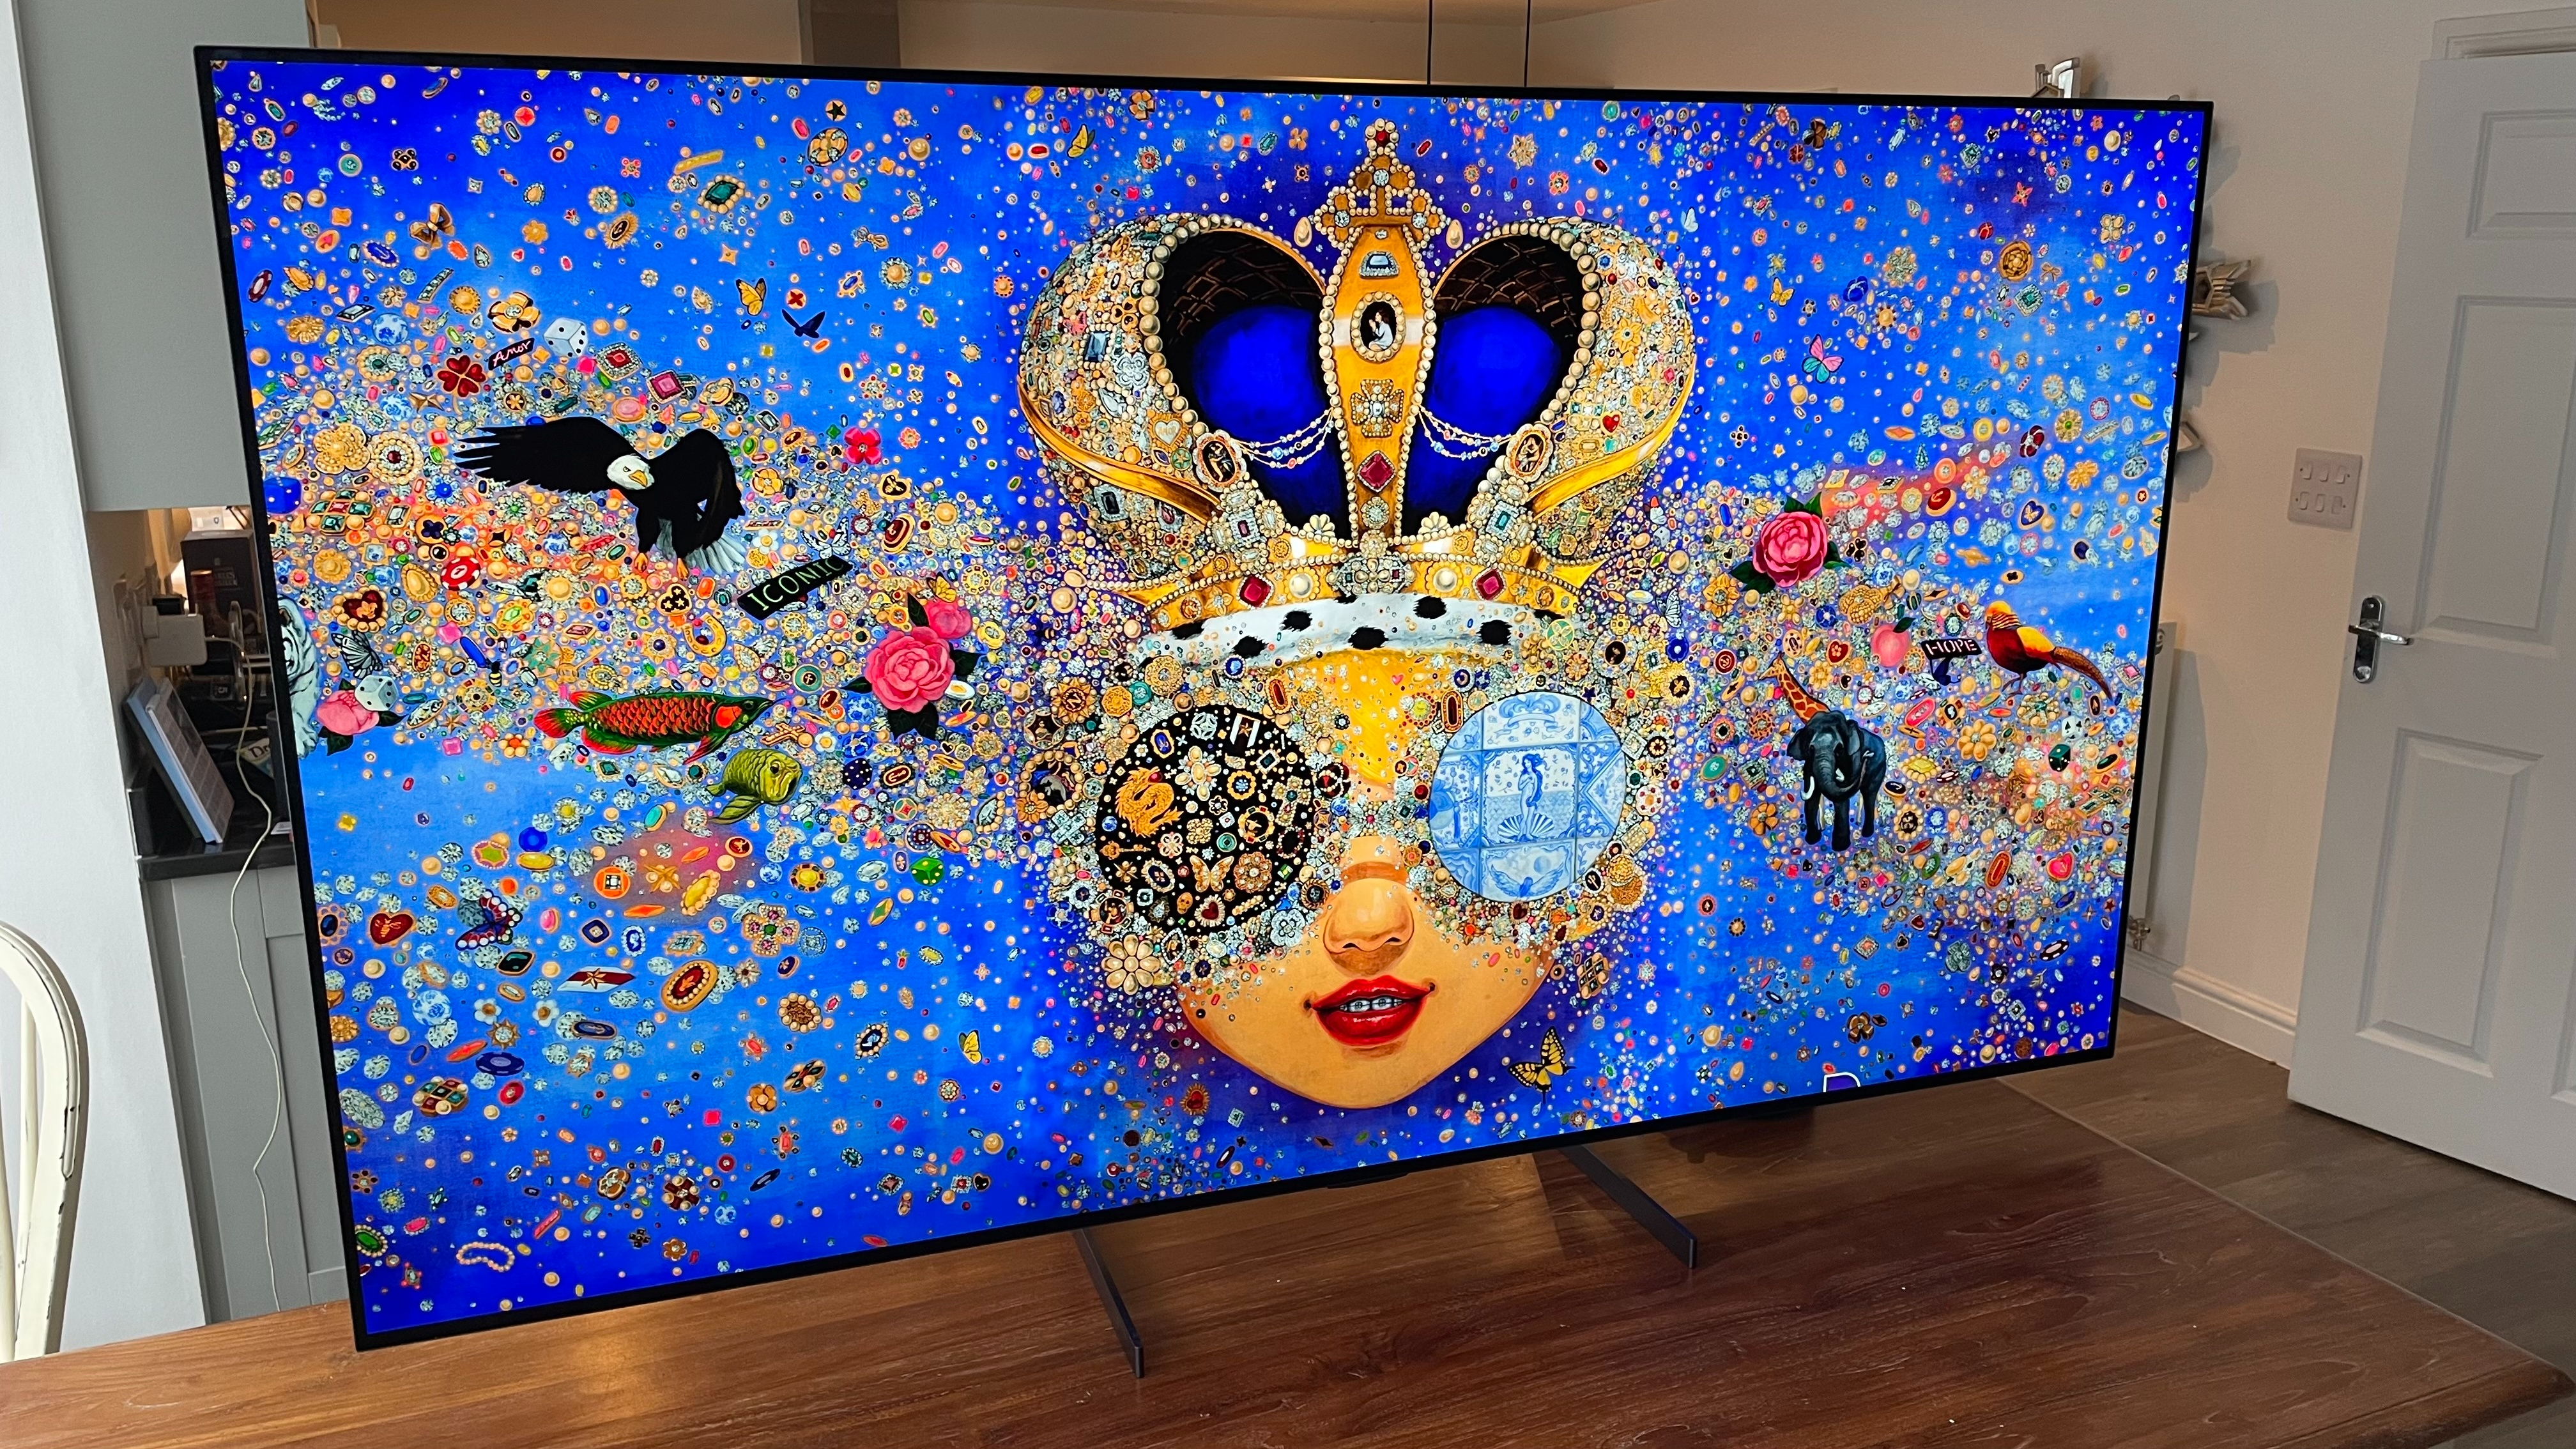 LG Z3 OLED TV showing colorful image